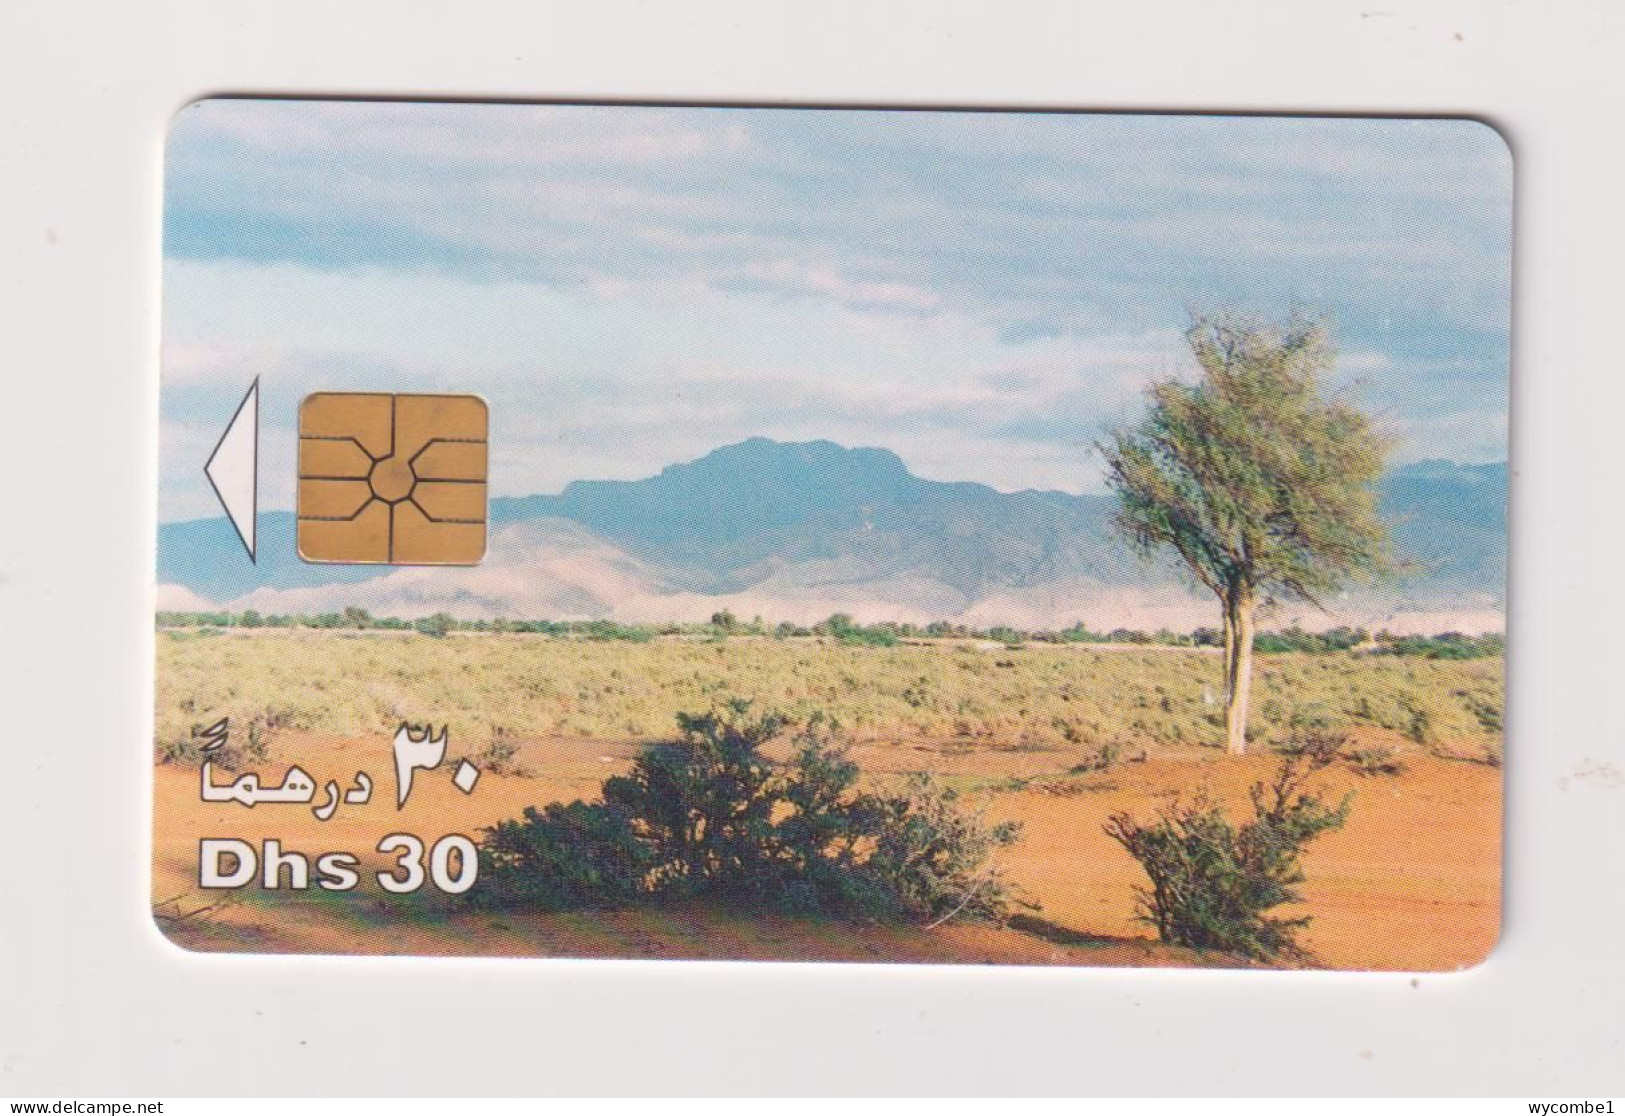 UNITED ARAB EMIRATES - View Towards Mountains Chip Phonecard - United Arab Emirates